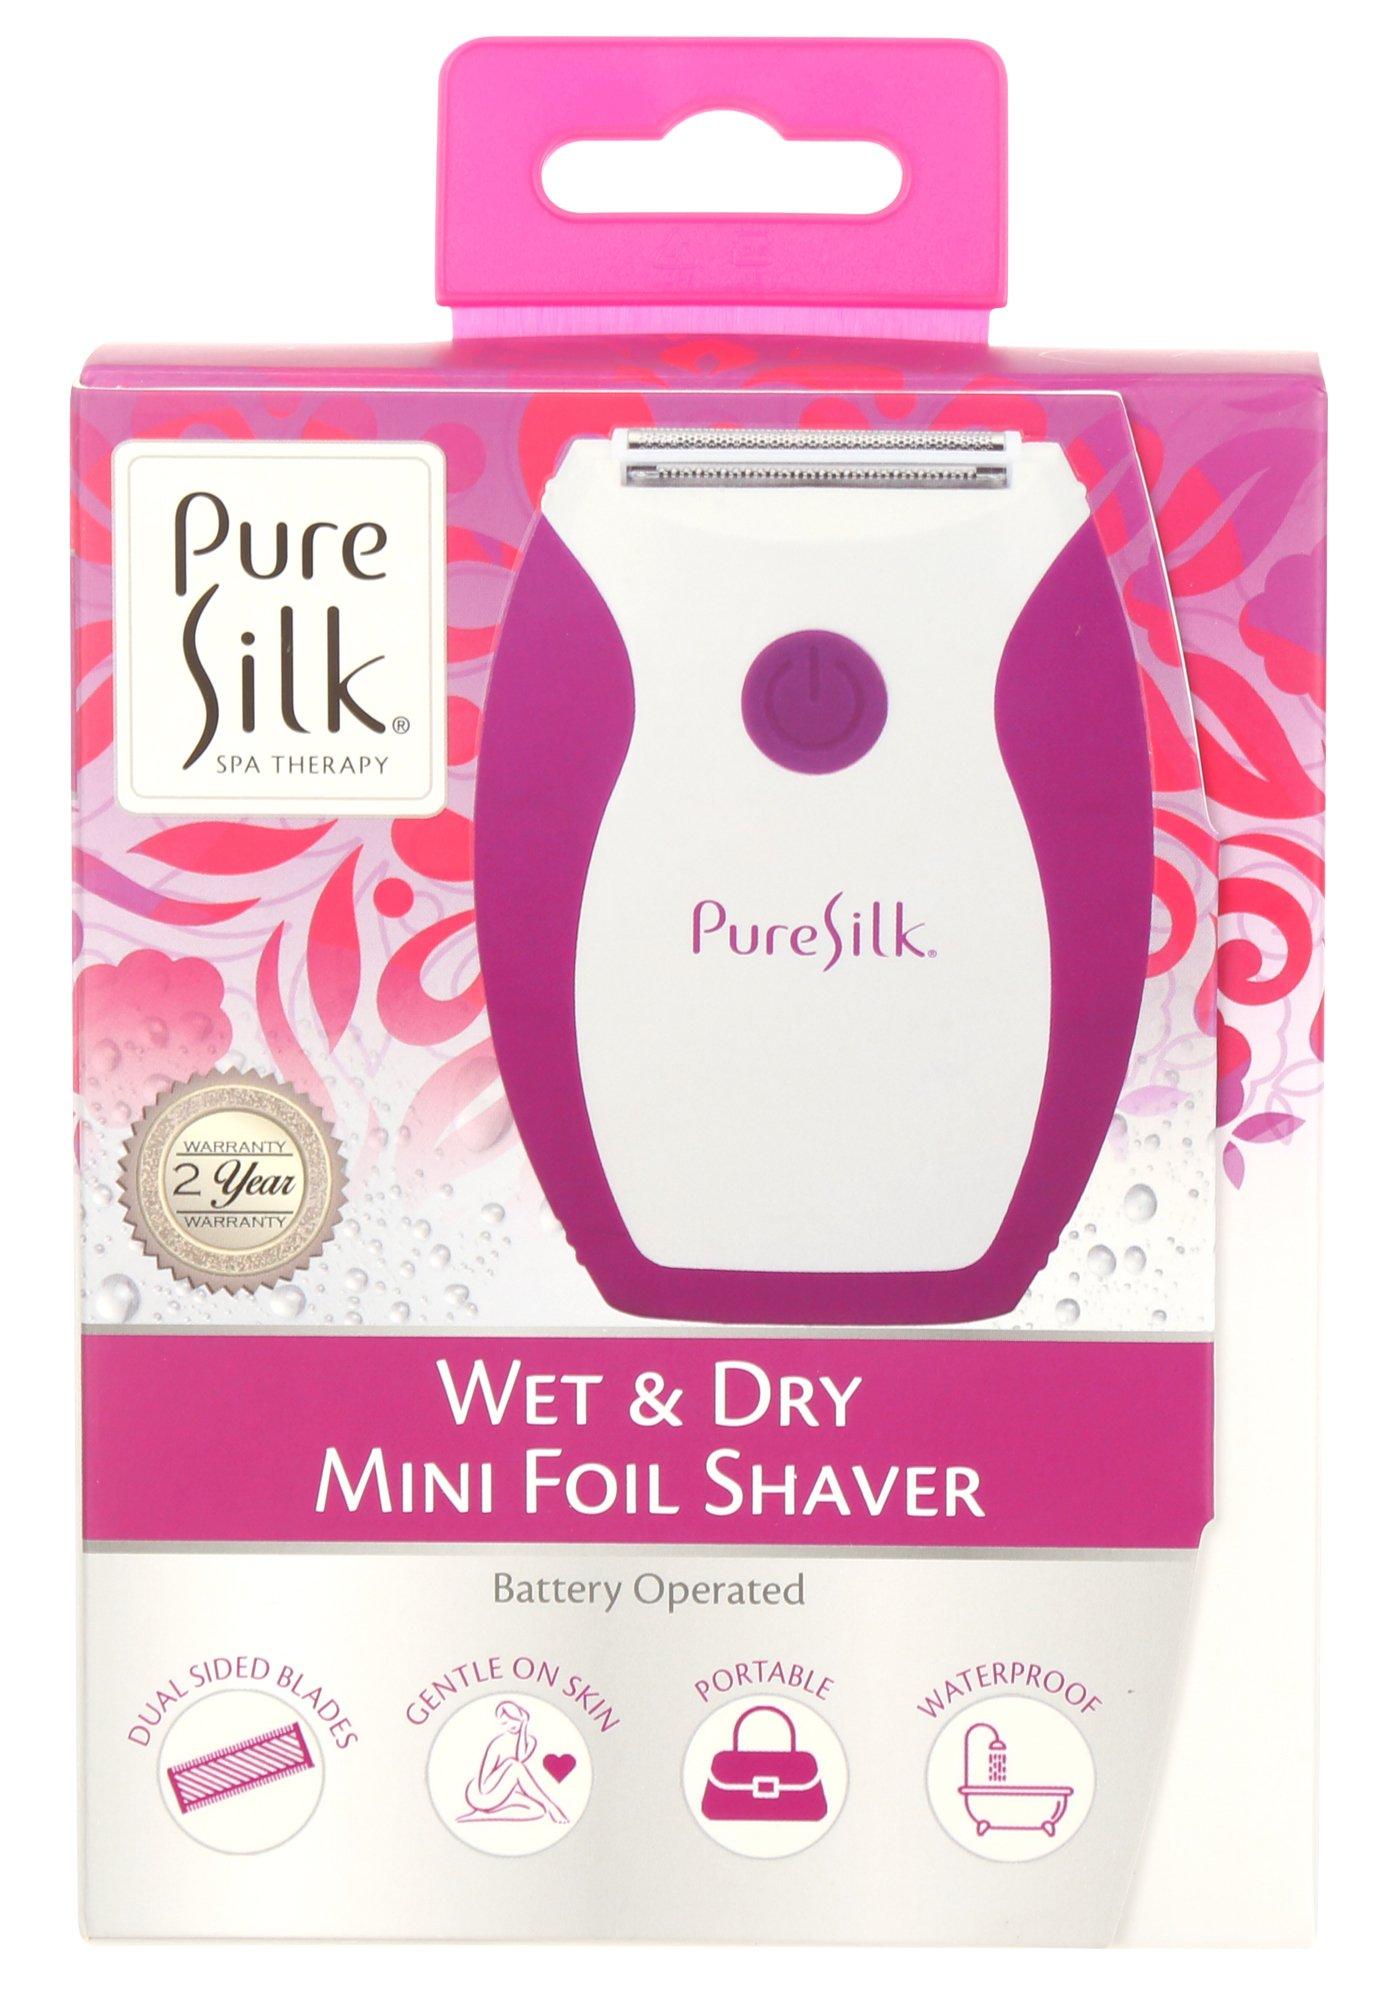 Wet & Dry Mini Foil Shaver